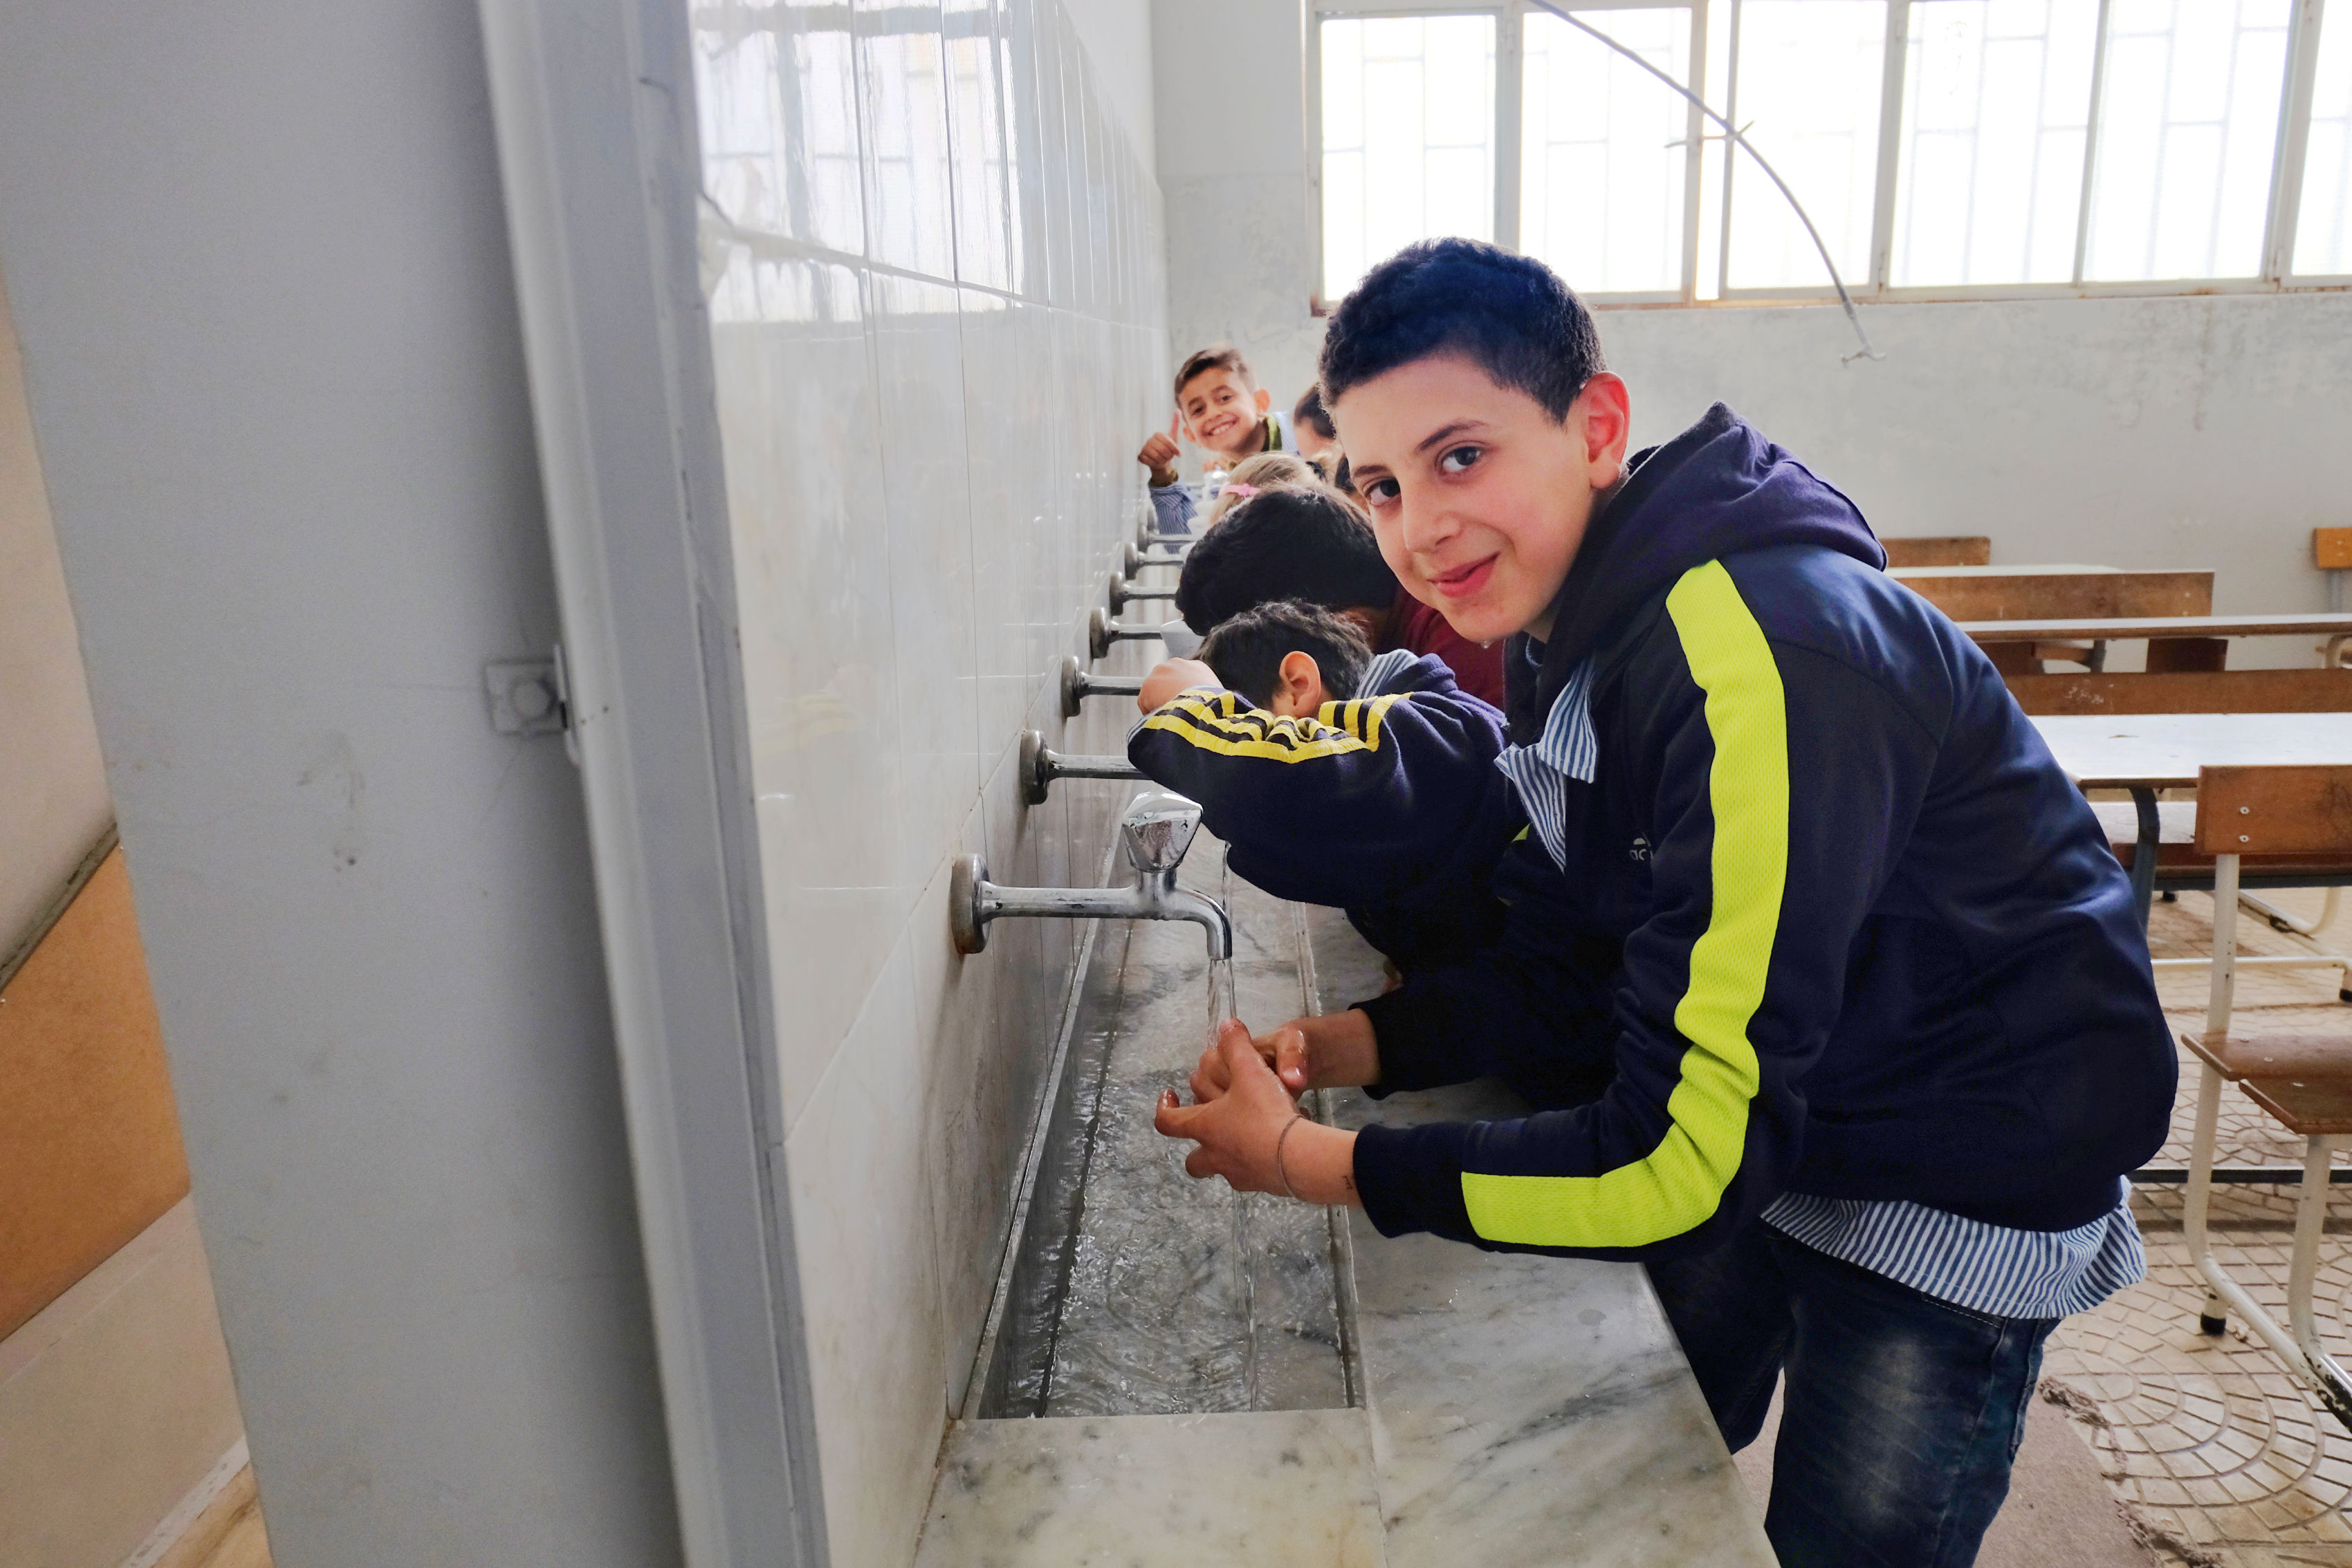 Title Lebanon - Boys using hand washing facility